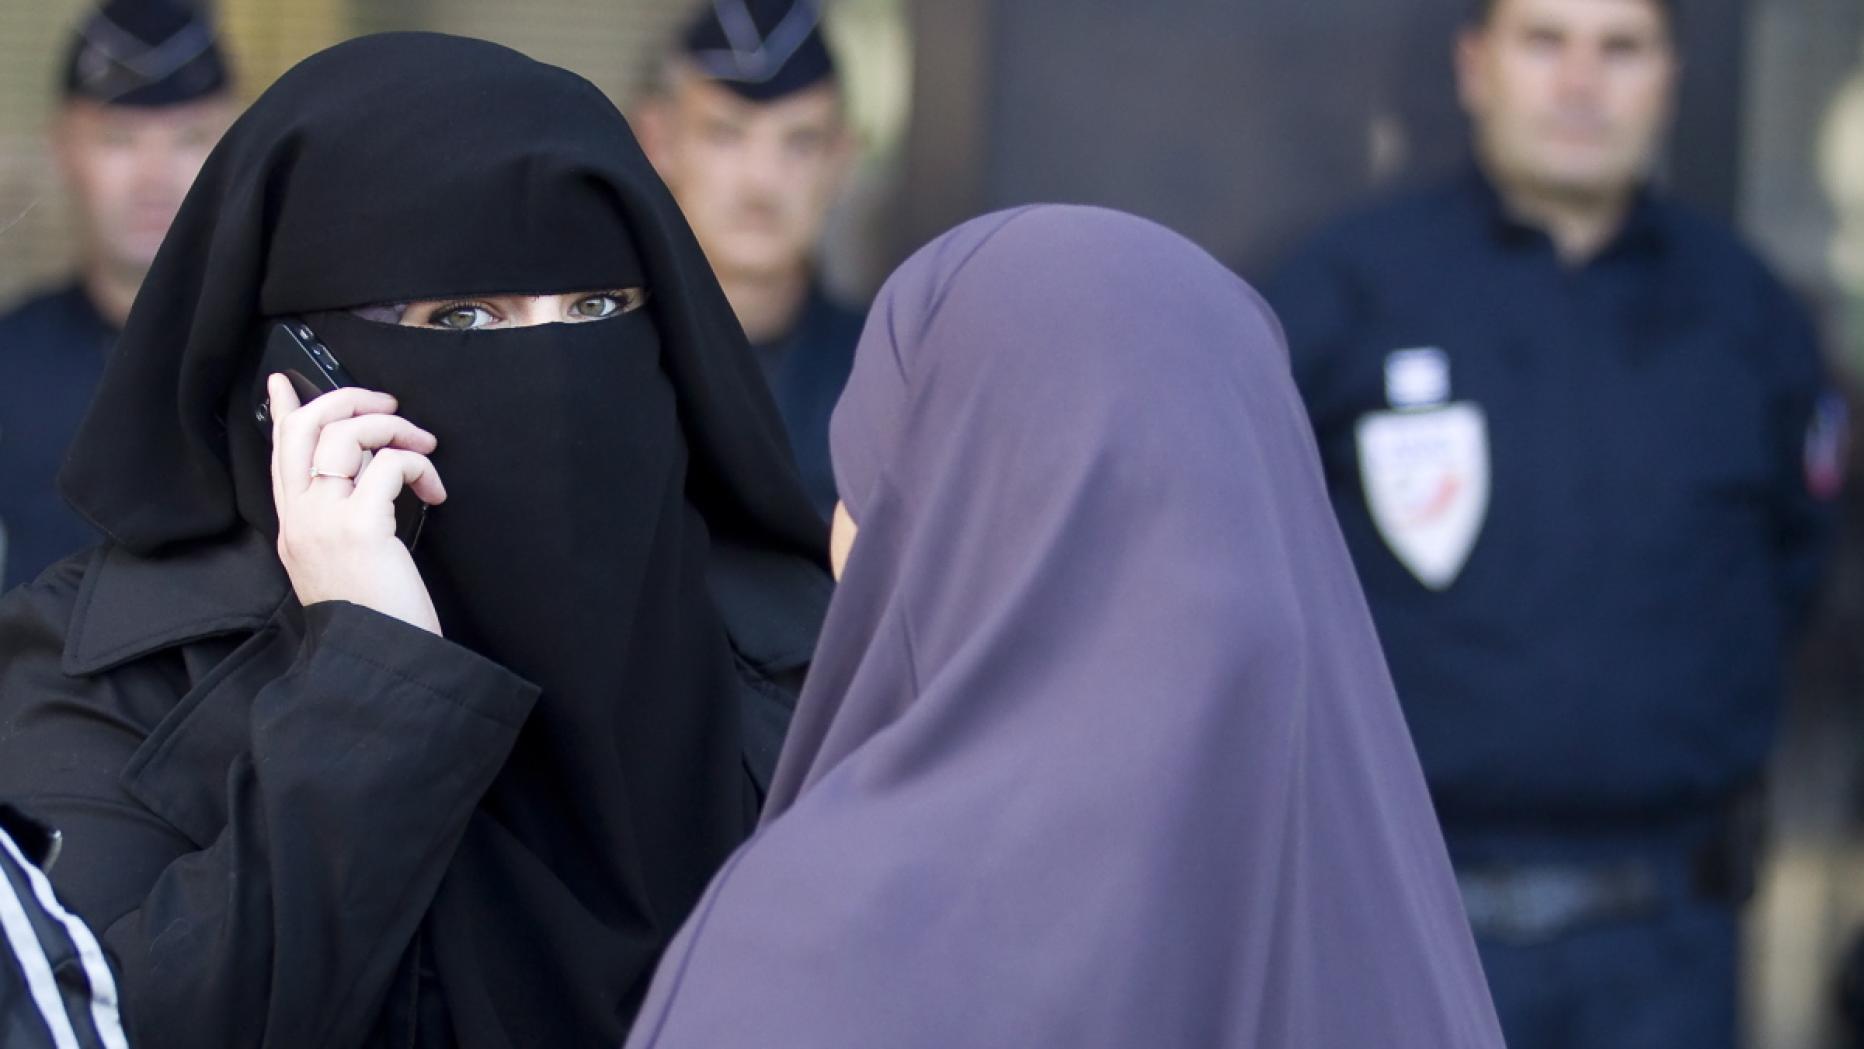 Eklat Um Niqab Trägerin In Pariser Oper Kurierat